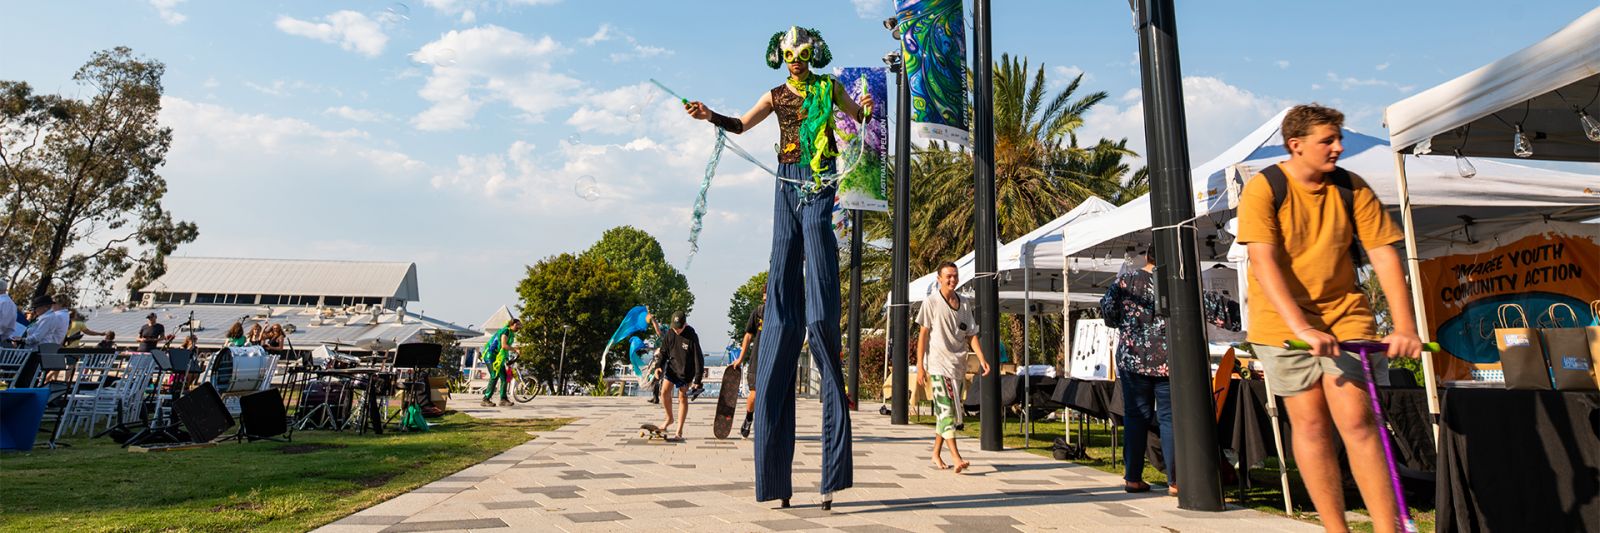 Stilt walker in costume blowing bubbles banner image